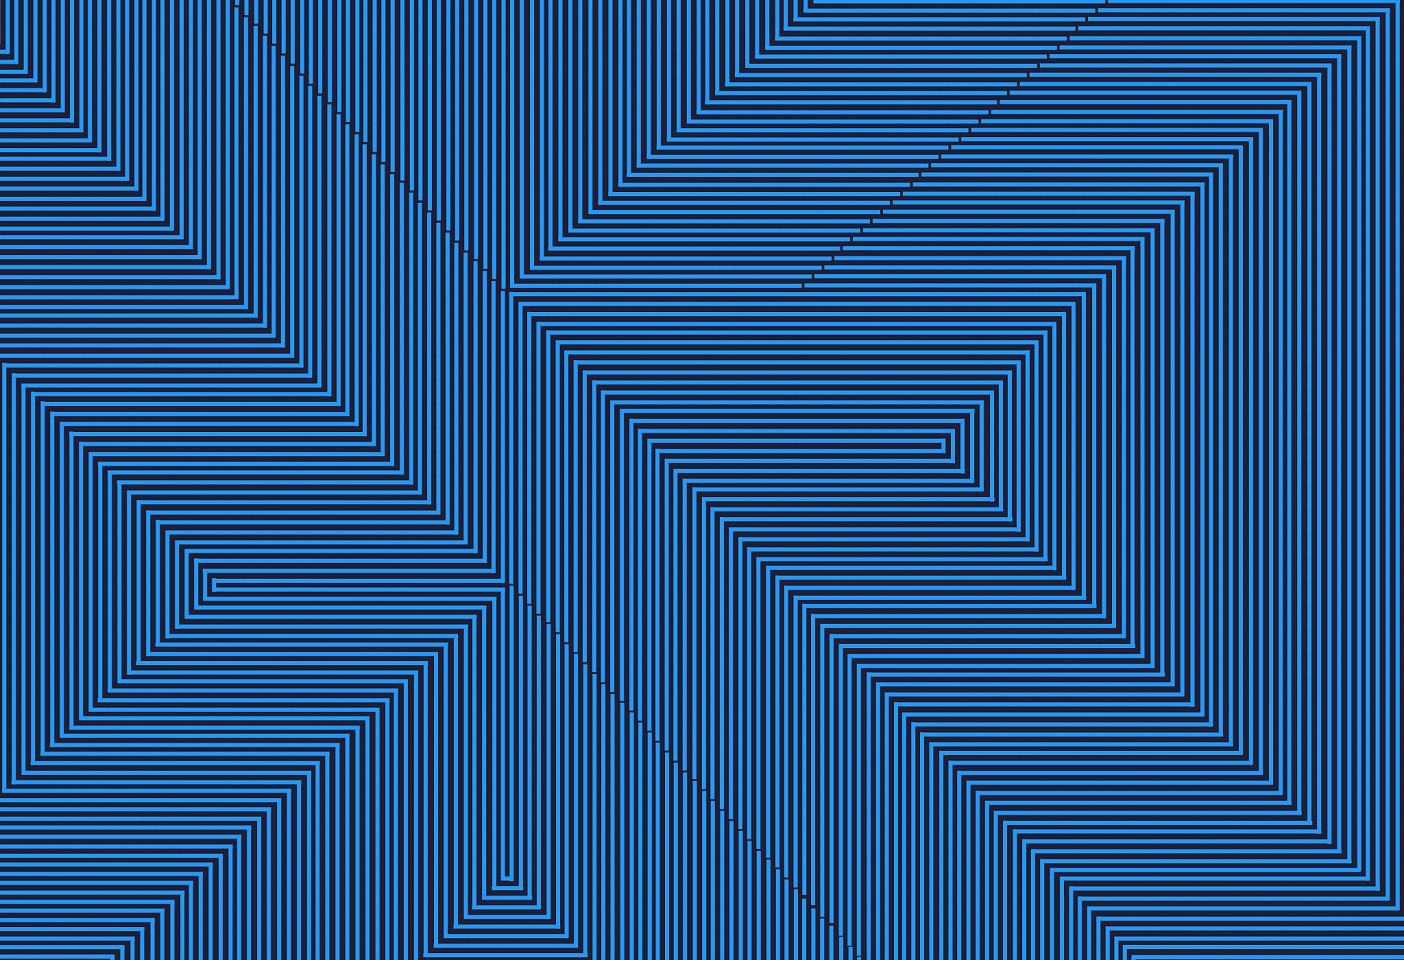 Dane Albert, Color Sticks #29 Night (mono), 2023
Acrylic on canvas (Concept), 48 x 72 in. (121.9 x 182.9 cm)
Series of colored lines and shapes in multiple configurations
DA.2023.sticks-029-night-mono